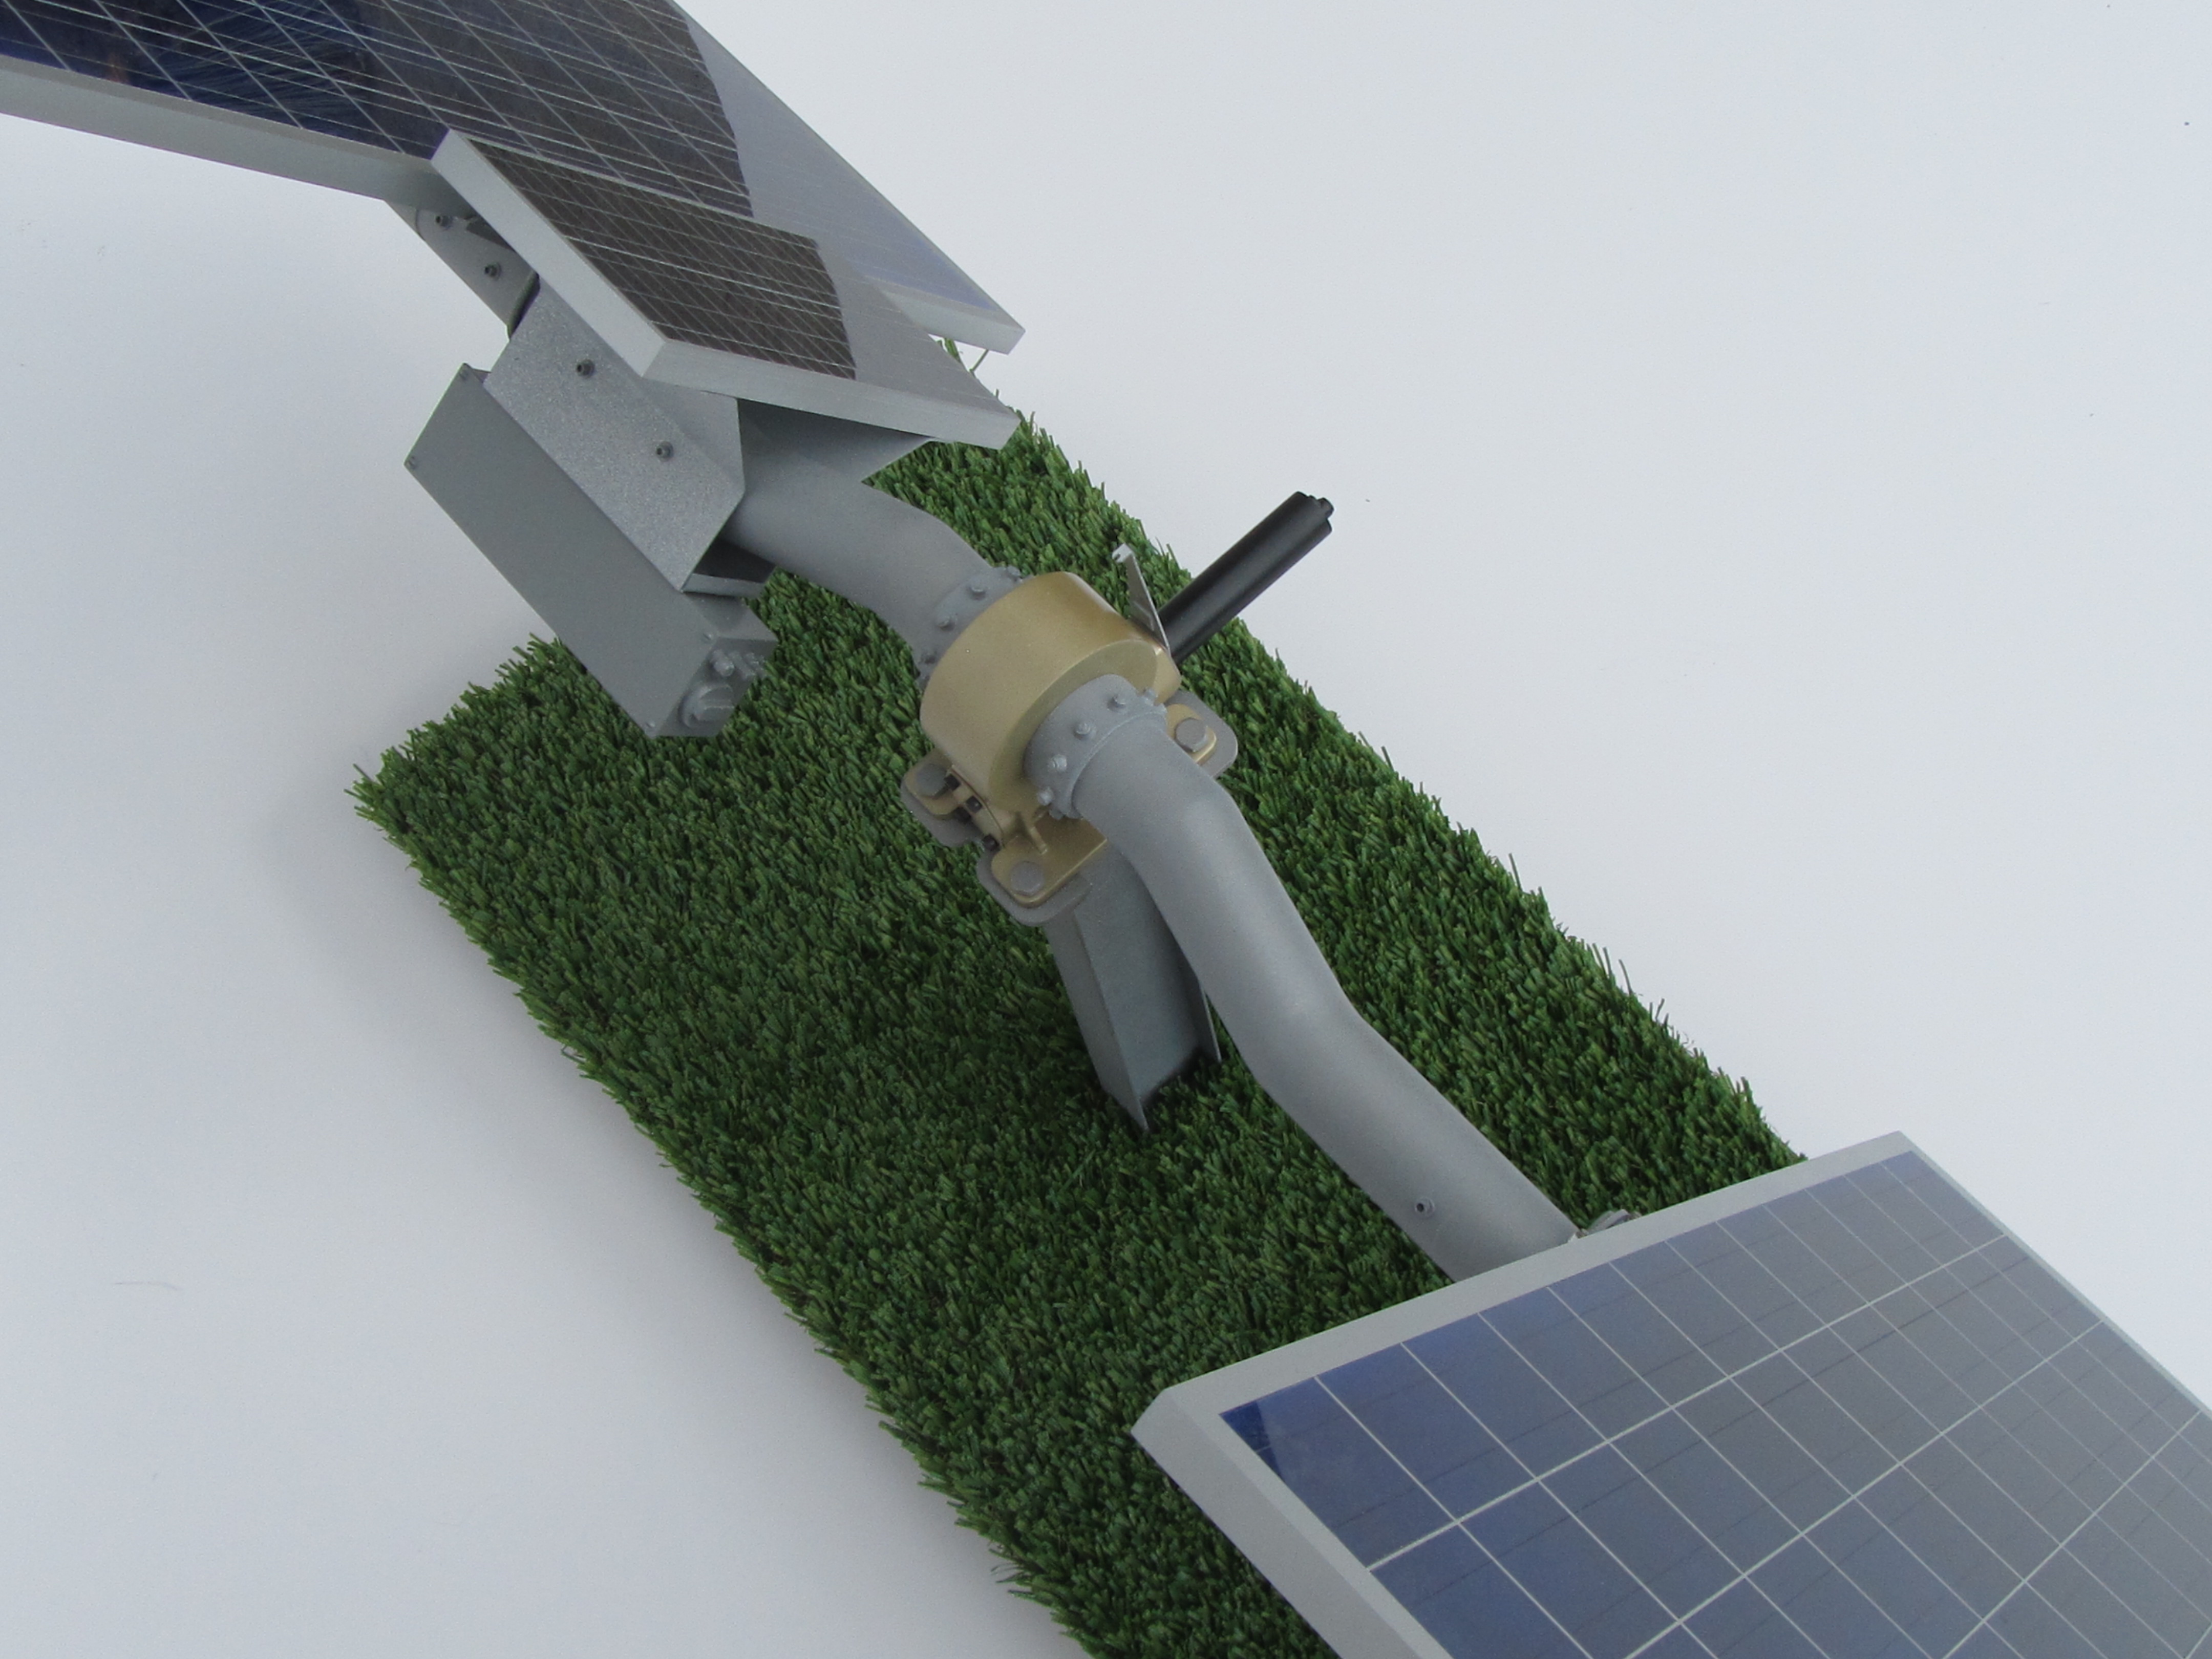 solar array model